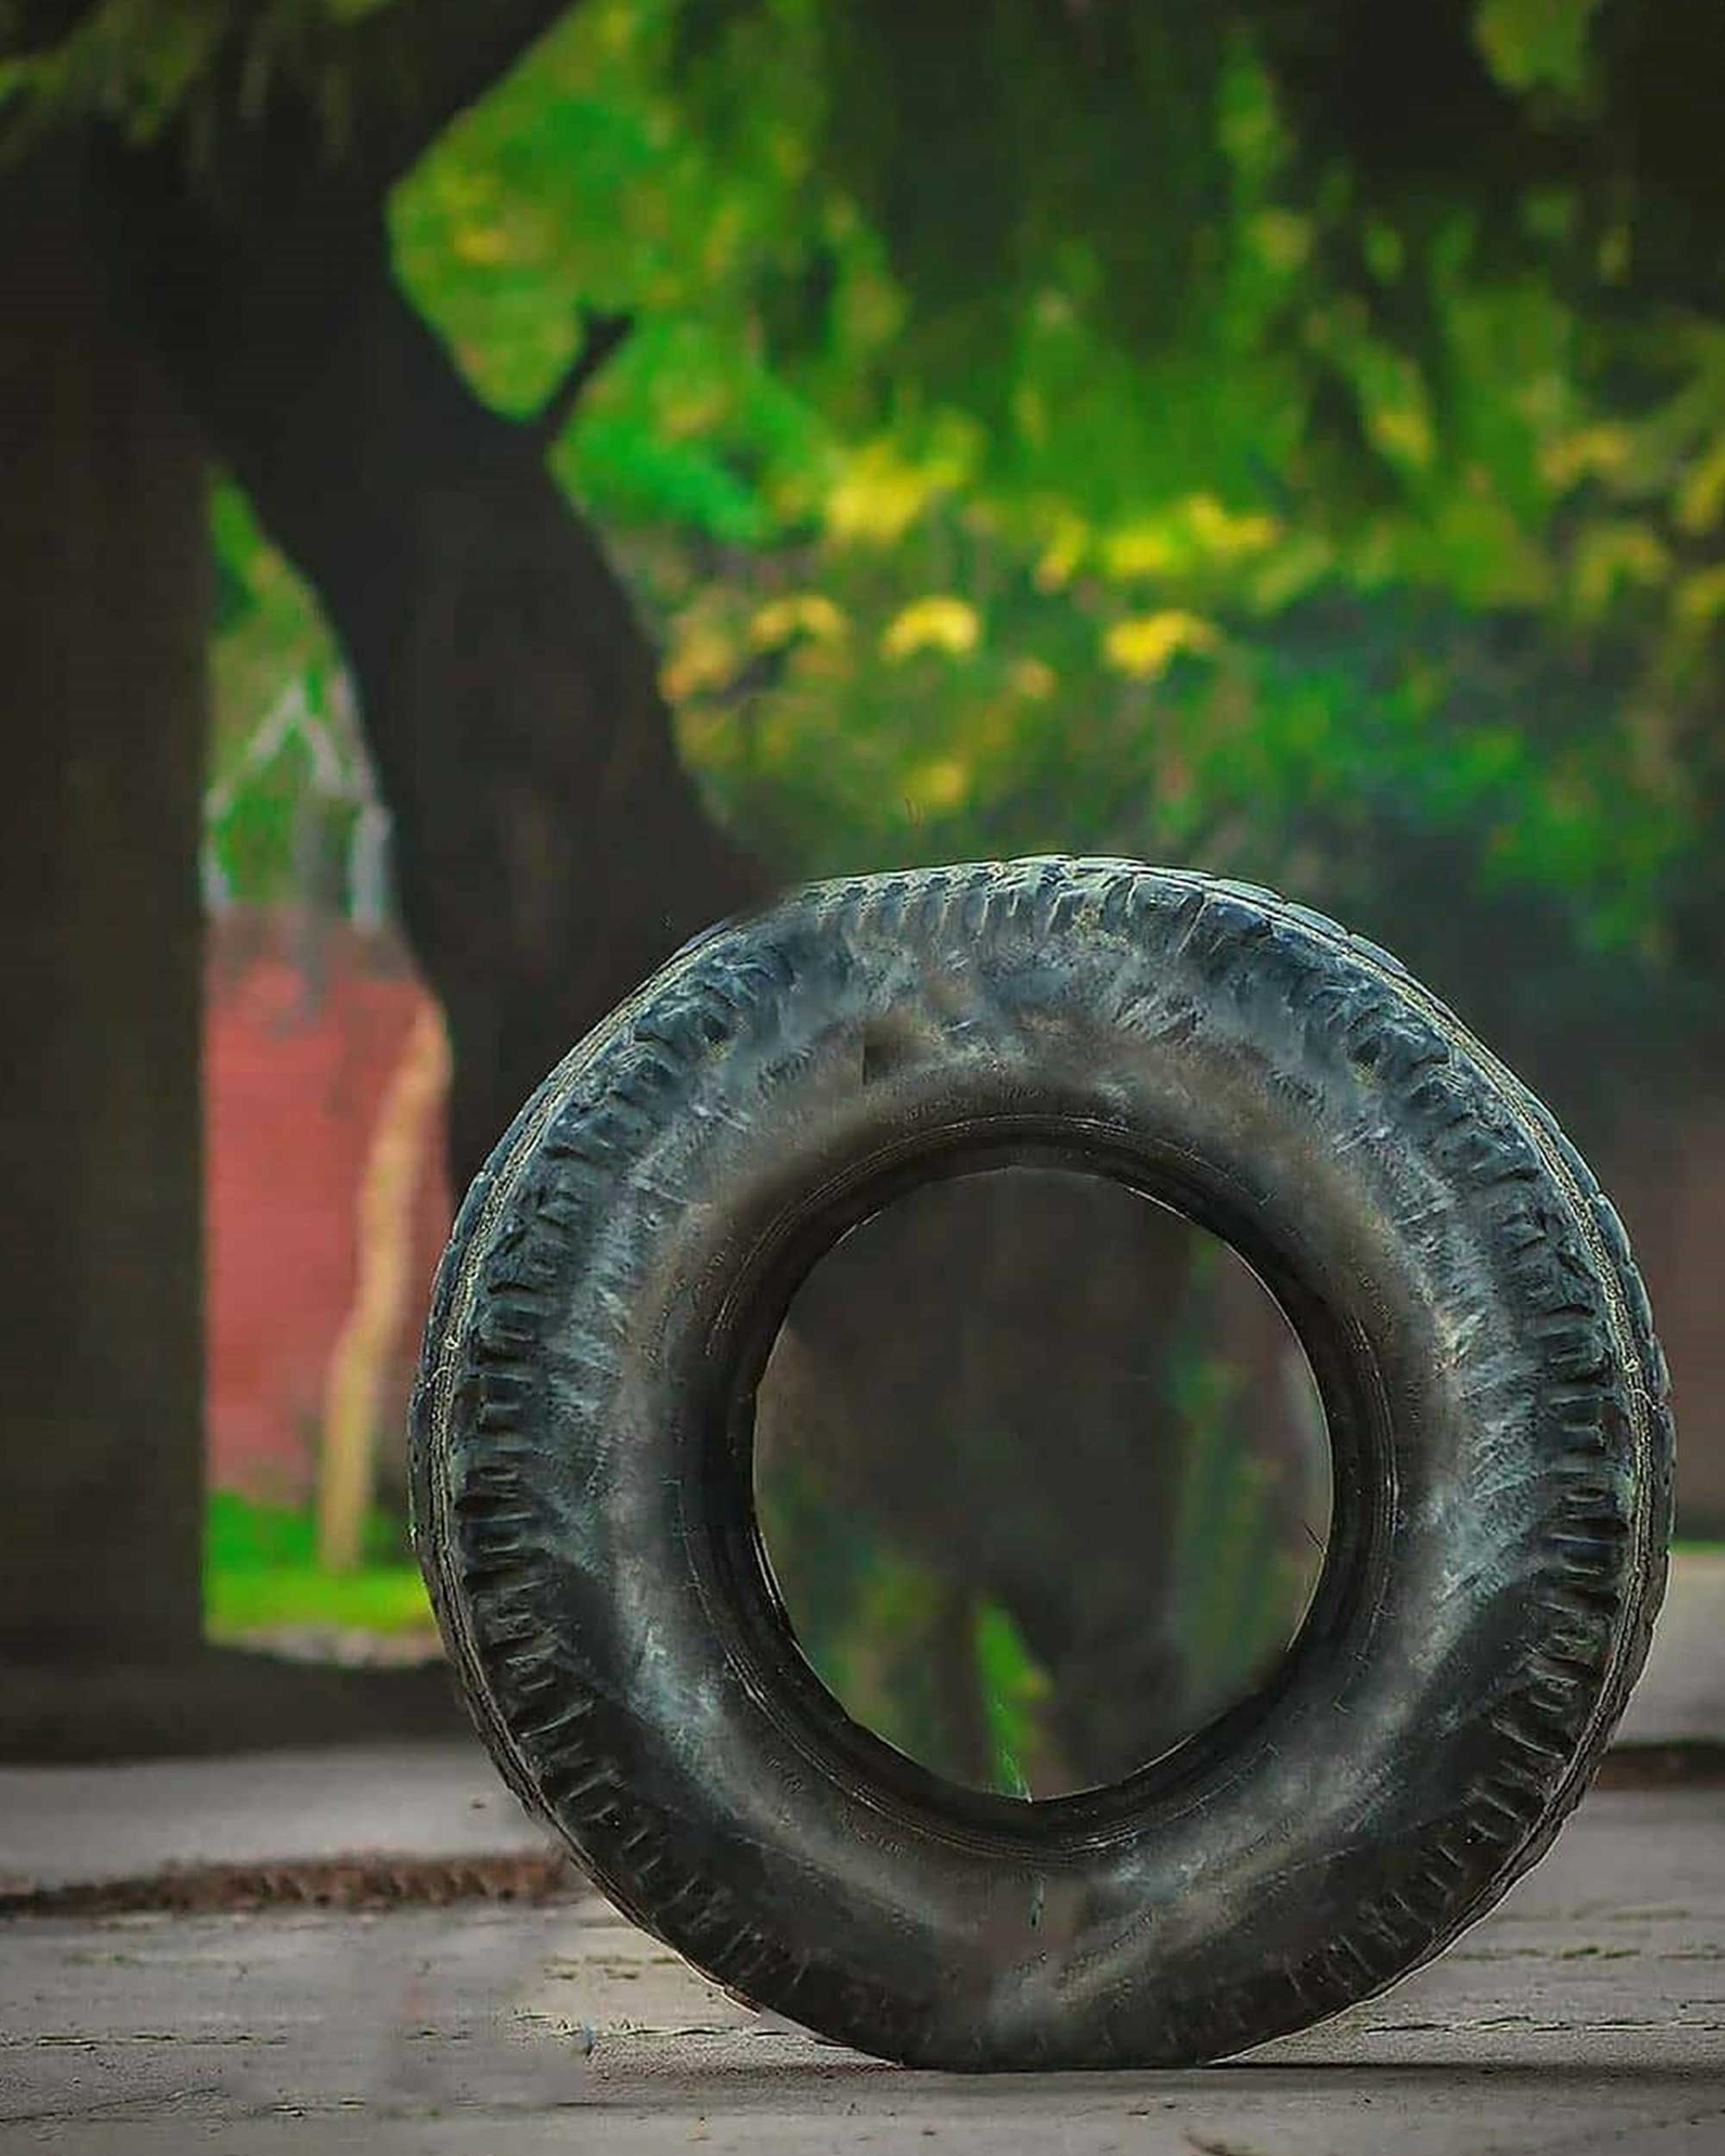 Vehicle Tyre Blur PicsArt Background Free Stock Image